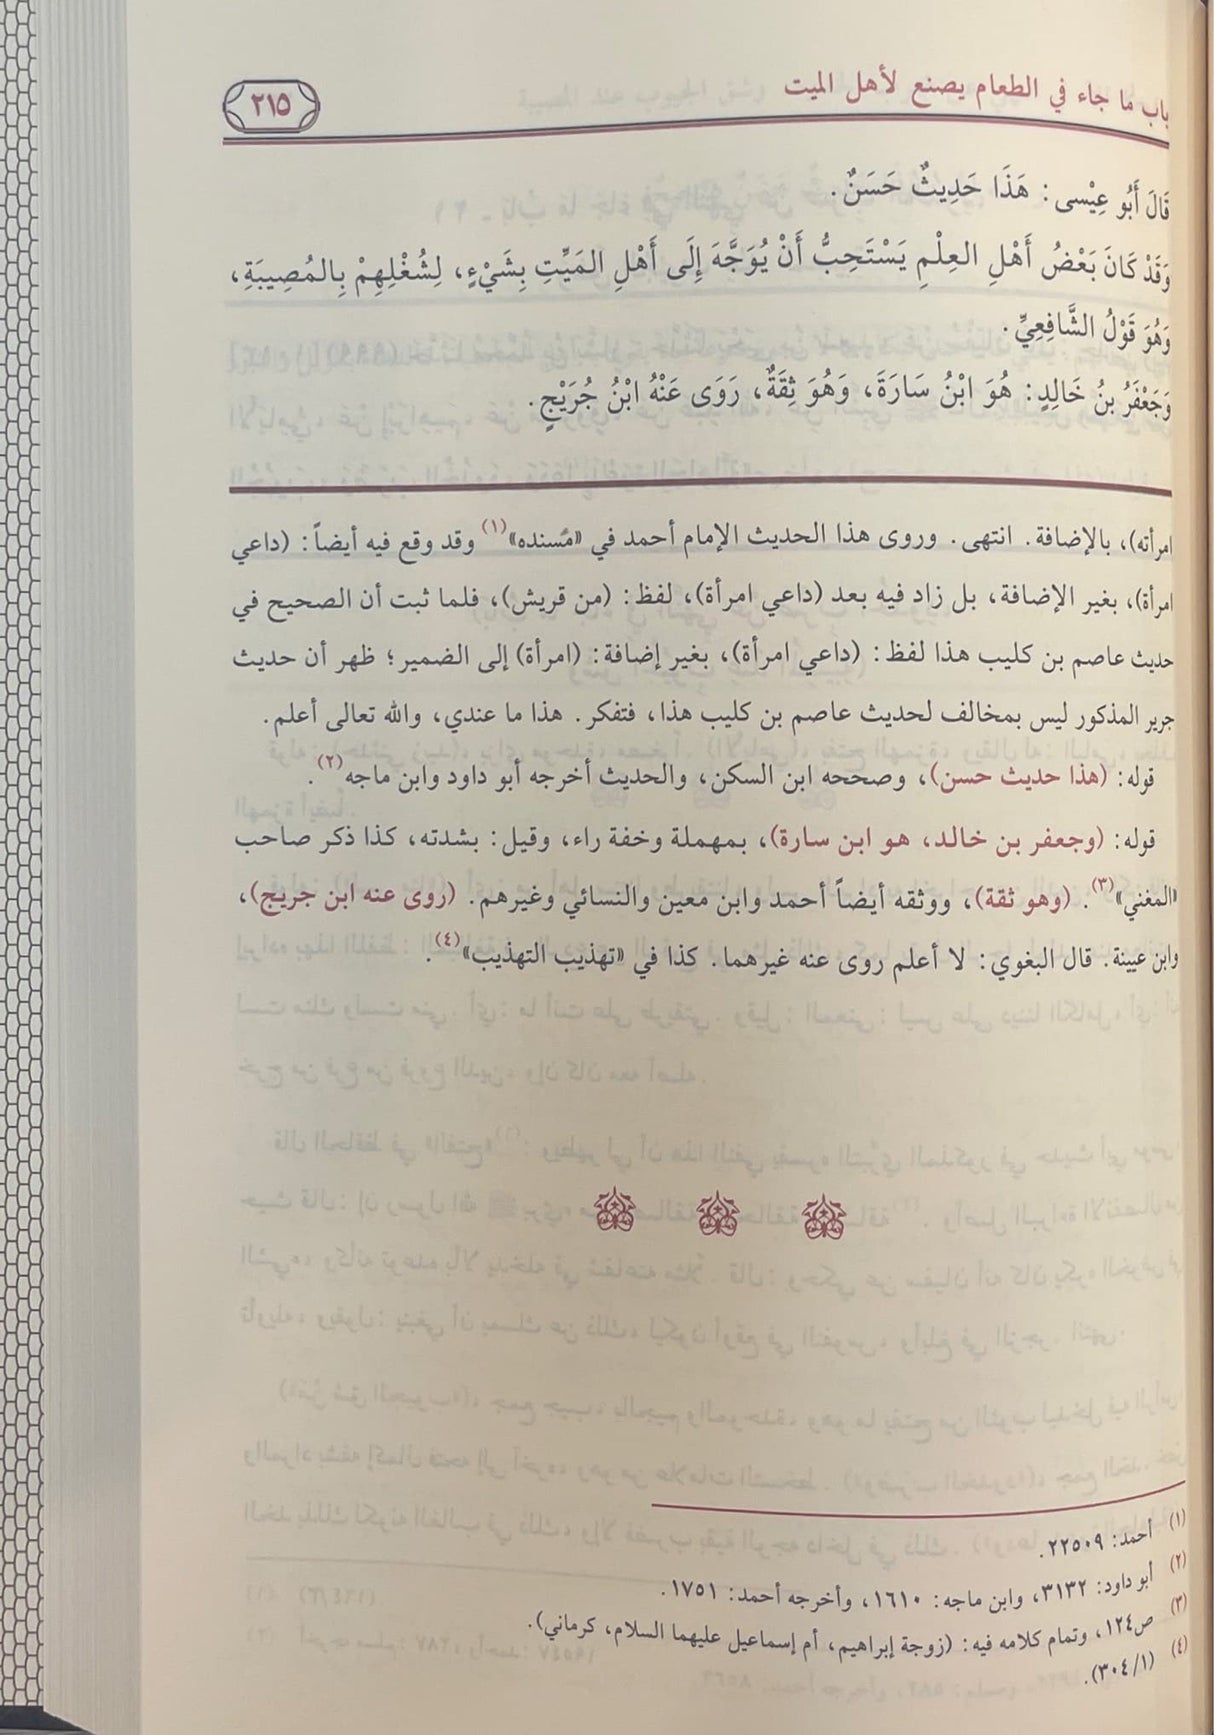 تحفة الاحوذي    Tuhfatul Ahwathi (16 Volume Set)